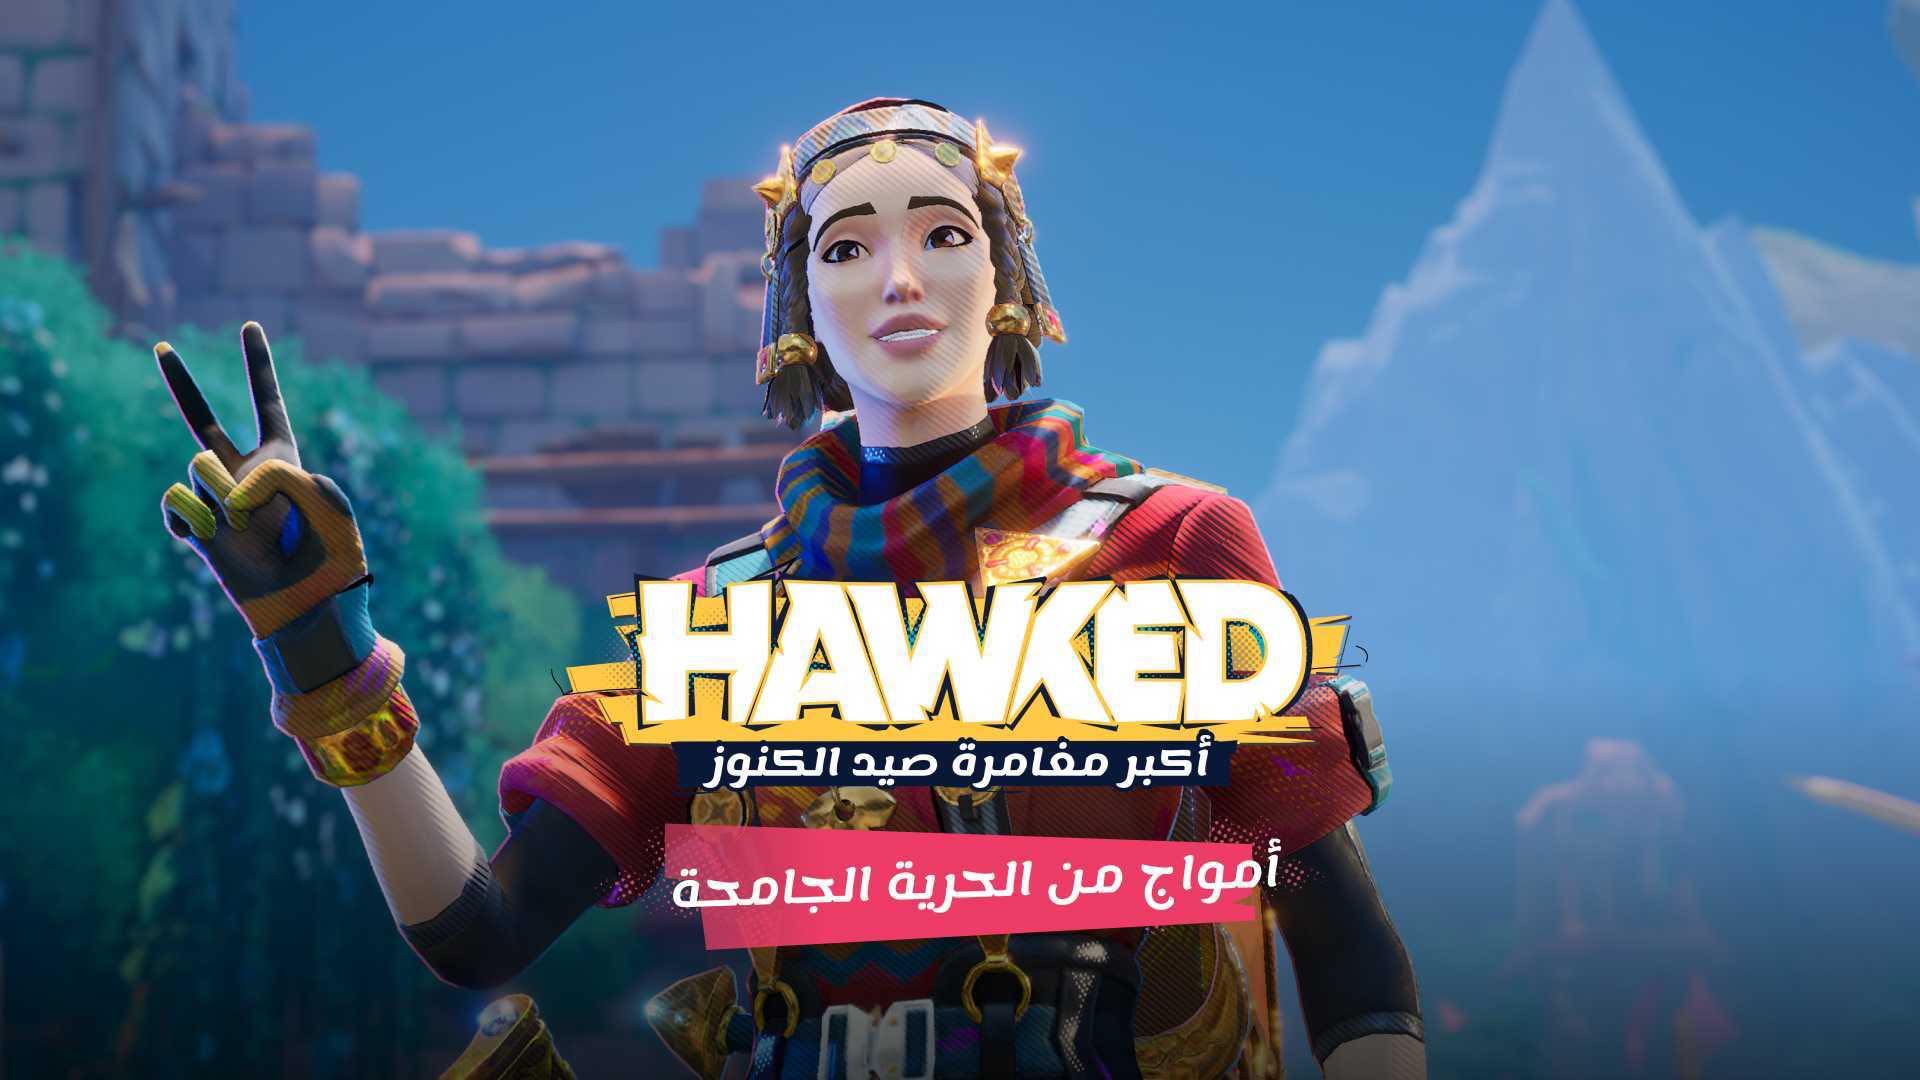 HAWKED تحتفل بوصولها ١.٥ مليون لاعب والمنطقة العربية في المقدمة!